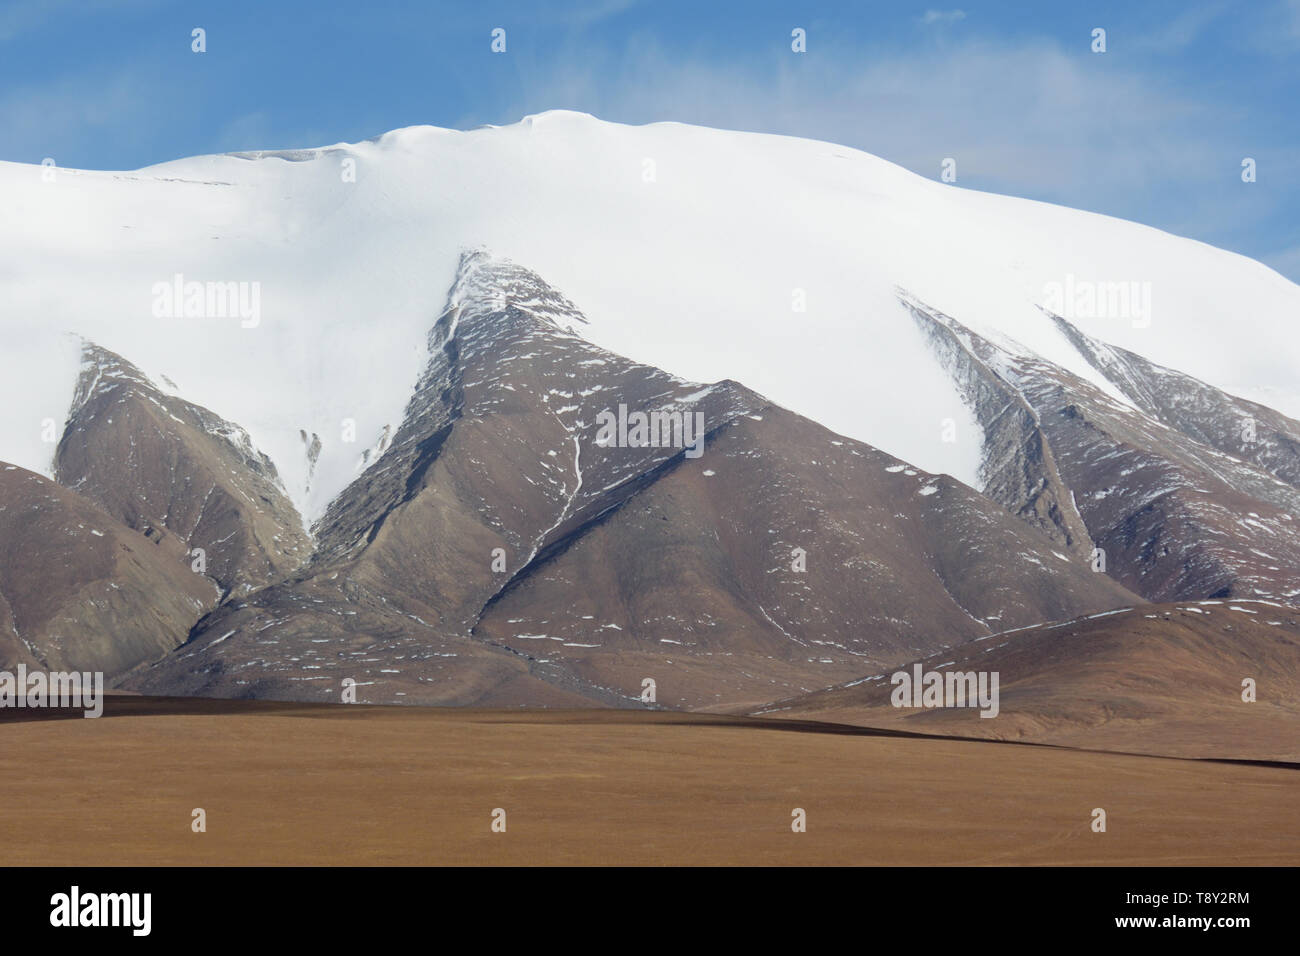 Snow capped mountains on the Tibetan Plateau, China Stock Photo